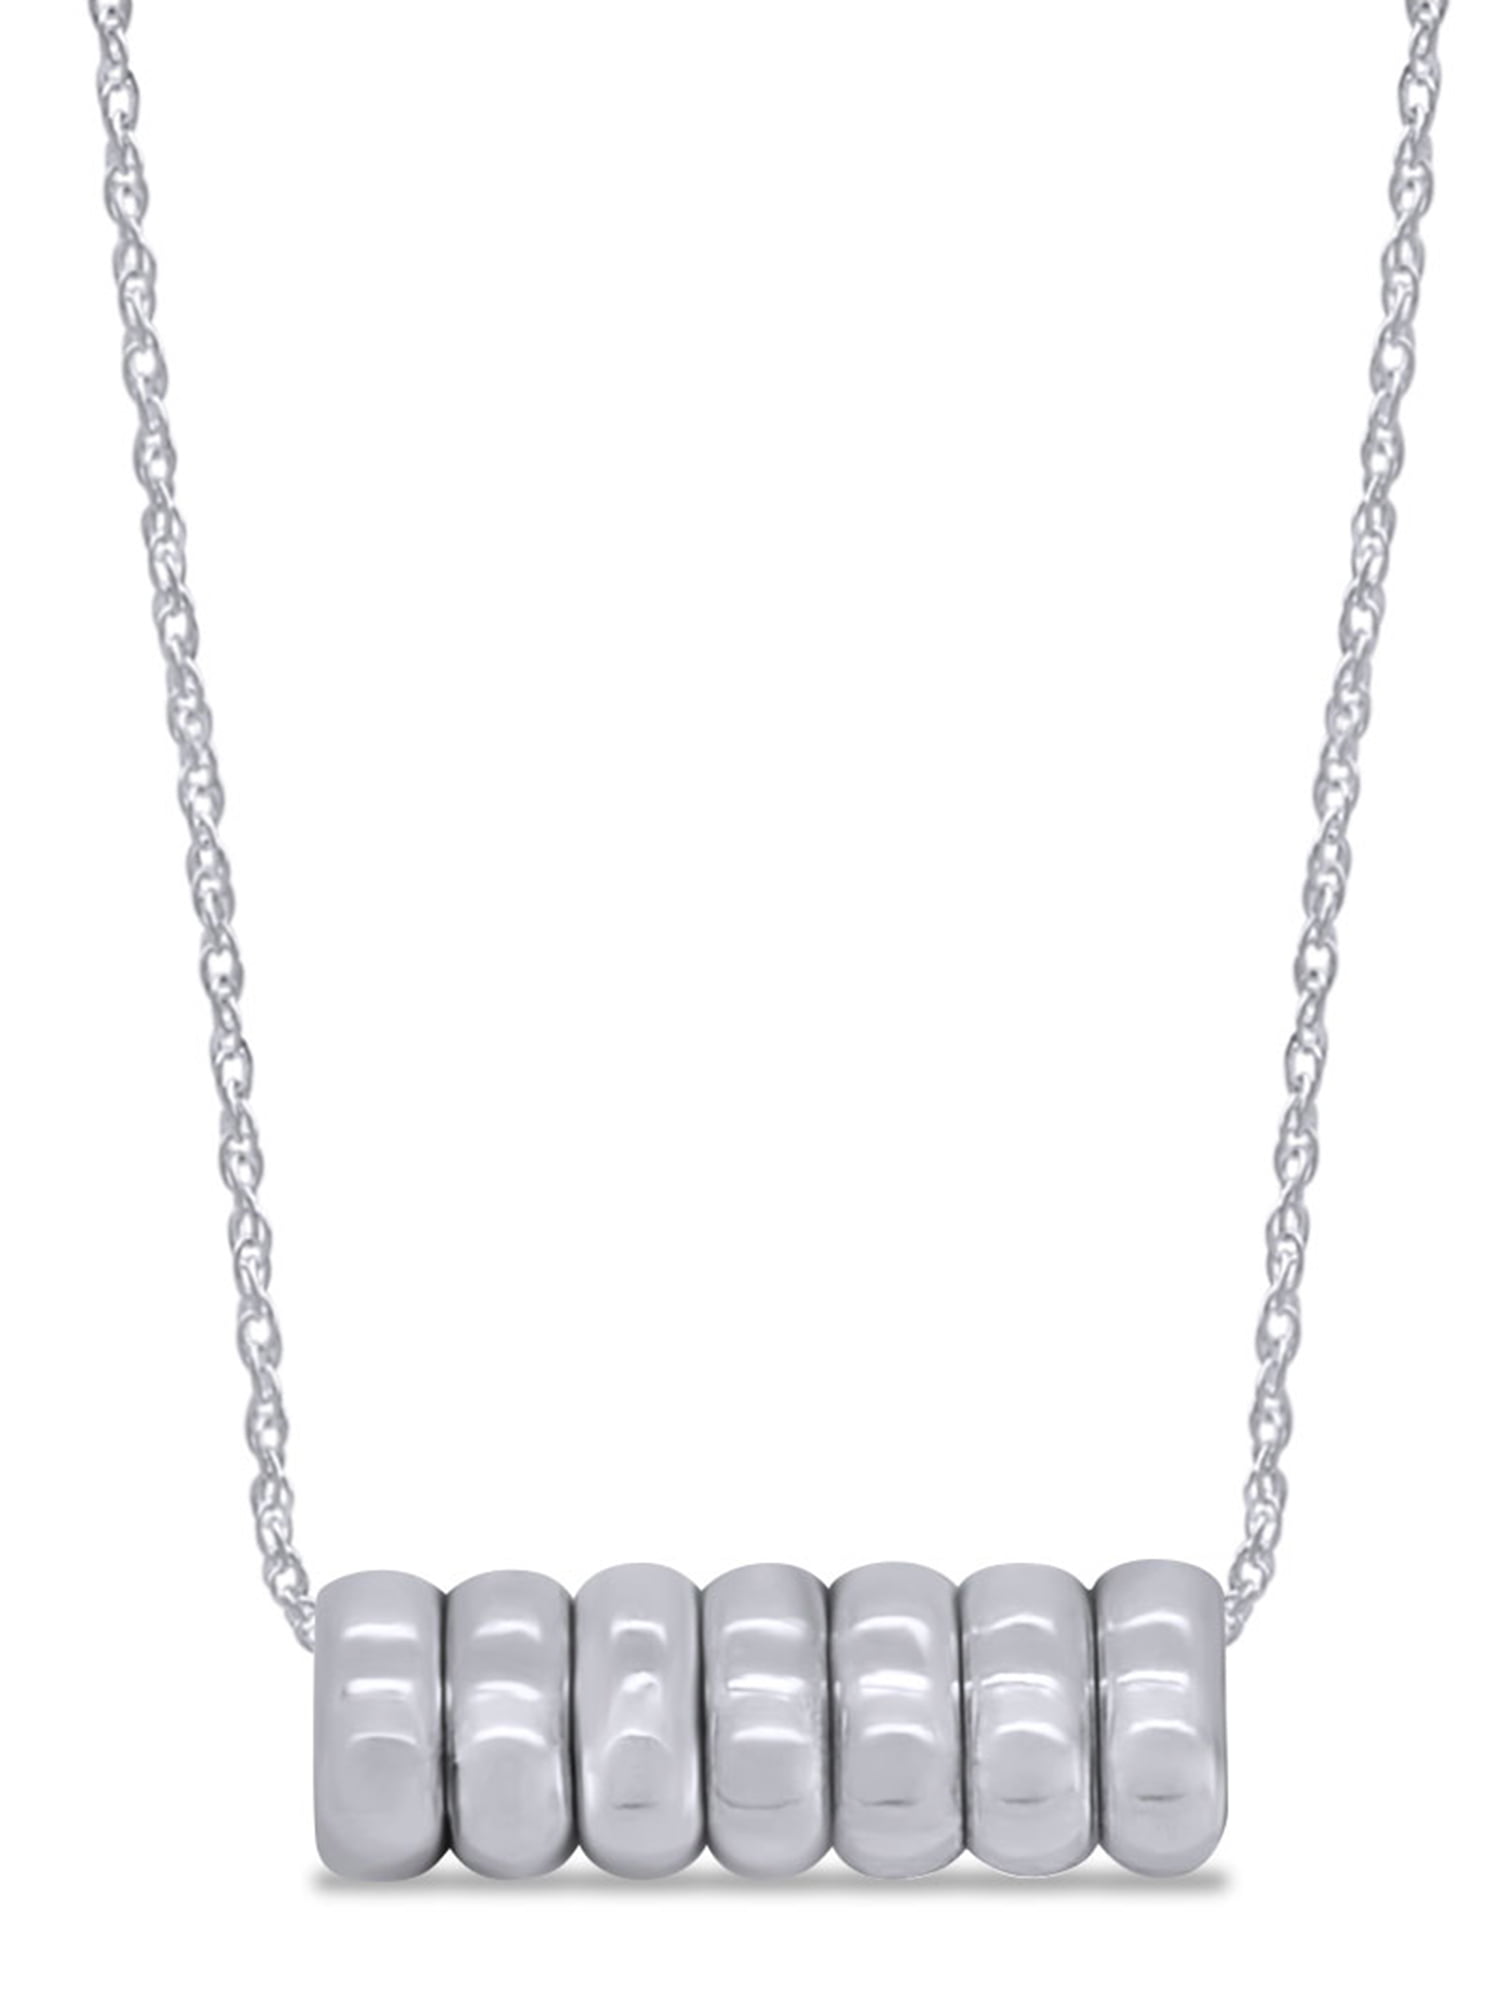 AFFY Simulated Gemstones Bar Link Chain Bracelets in 14k White Gold Over Sterling Silver